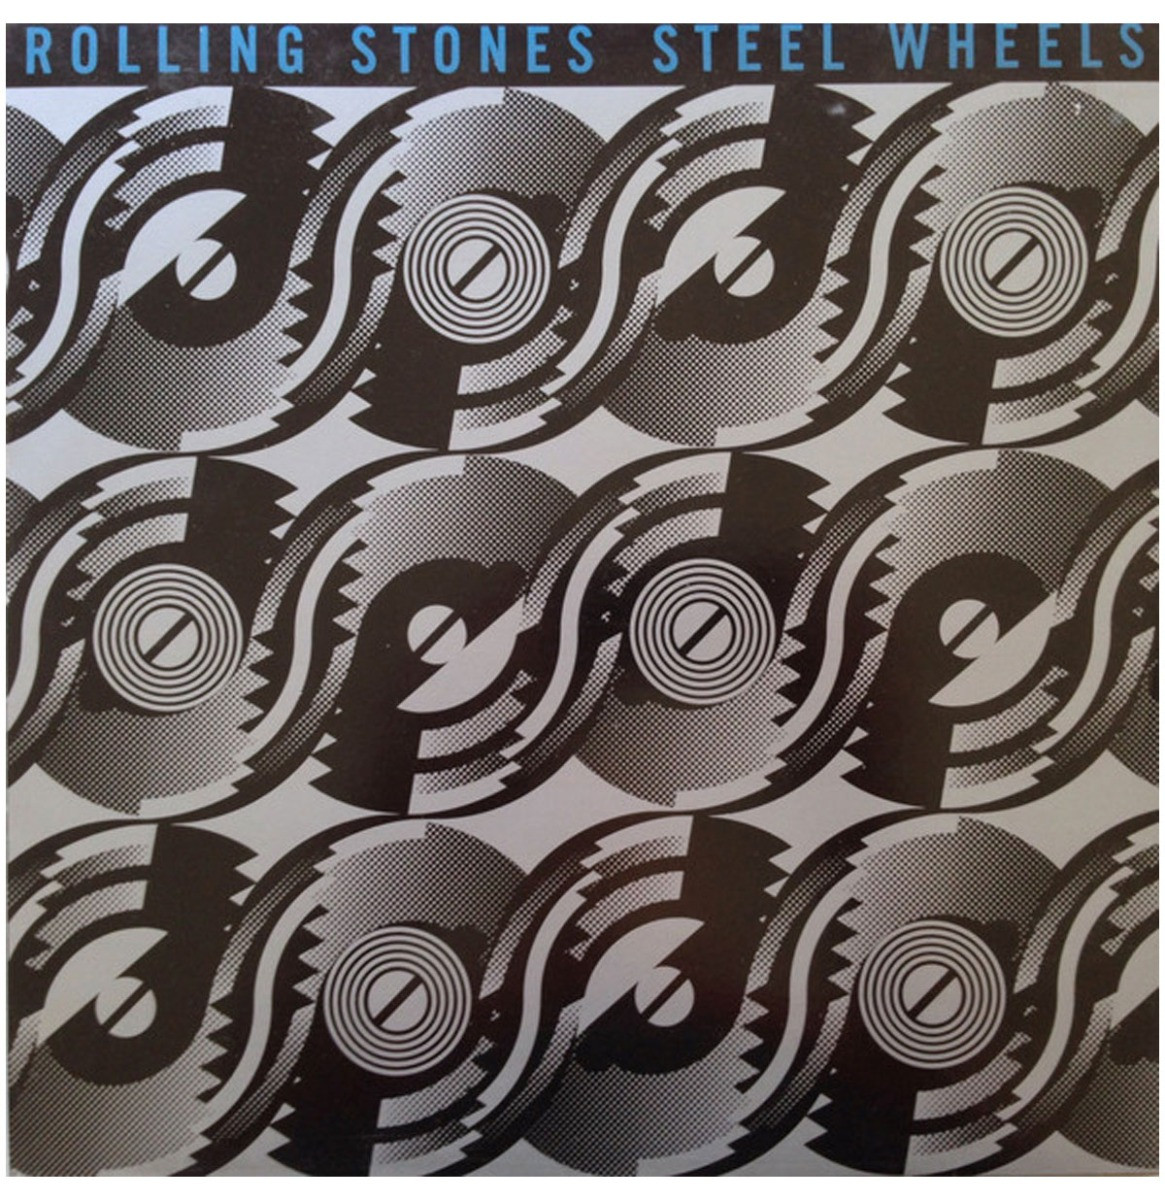 Rolling Stones Steel Wheels LP